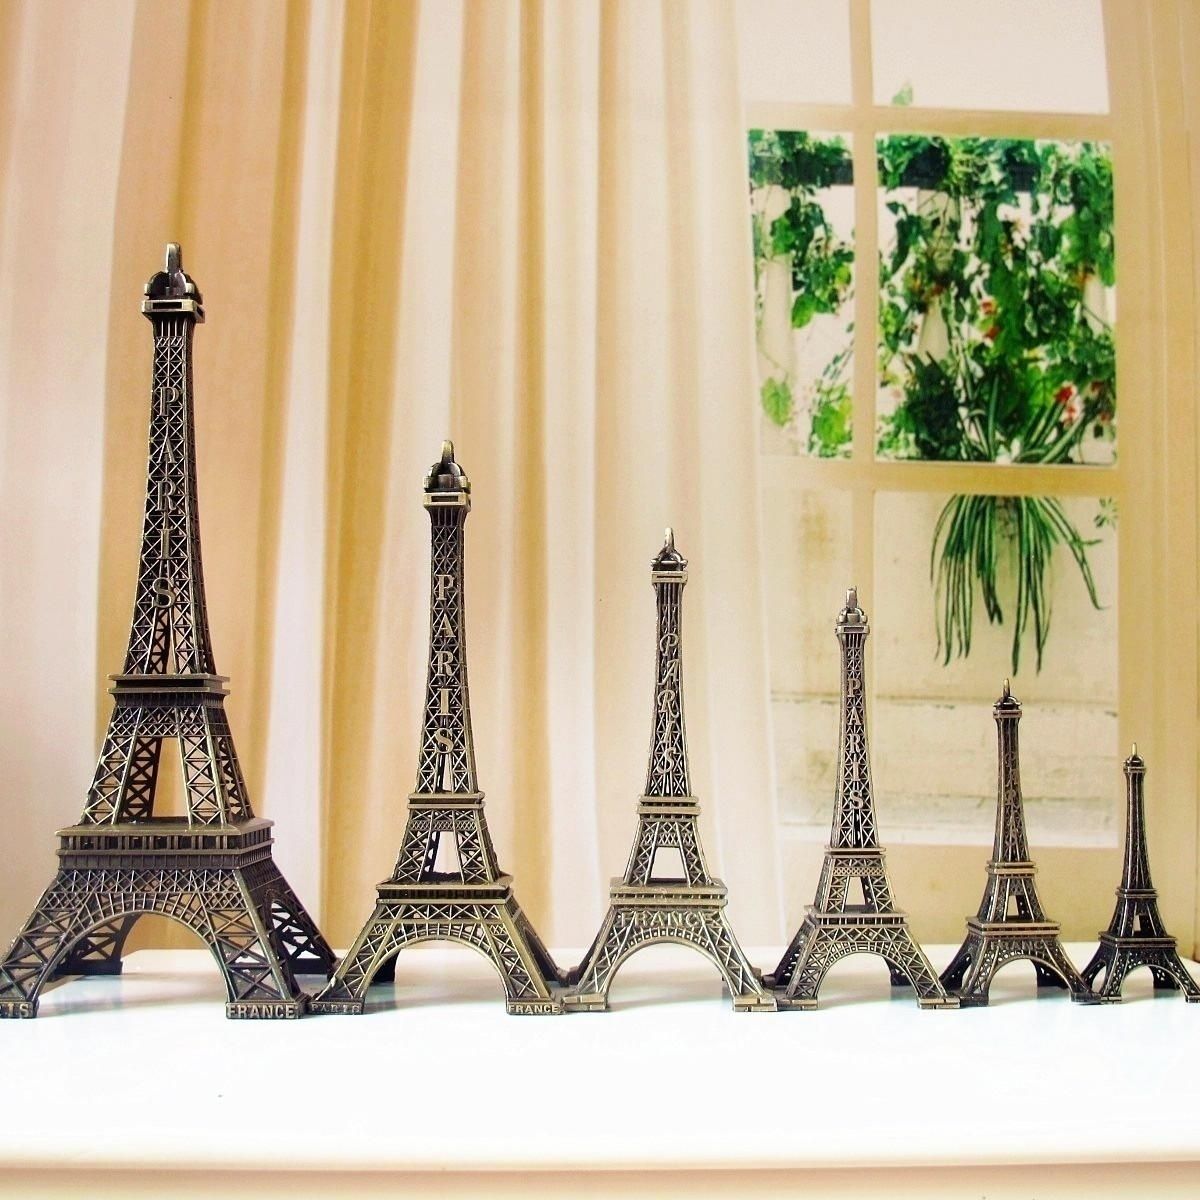 Vintage Eiffel Tower Model Iron Eiffel Tower Decoration Home